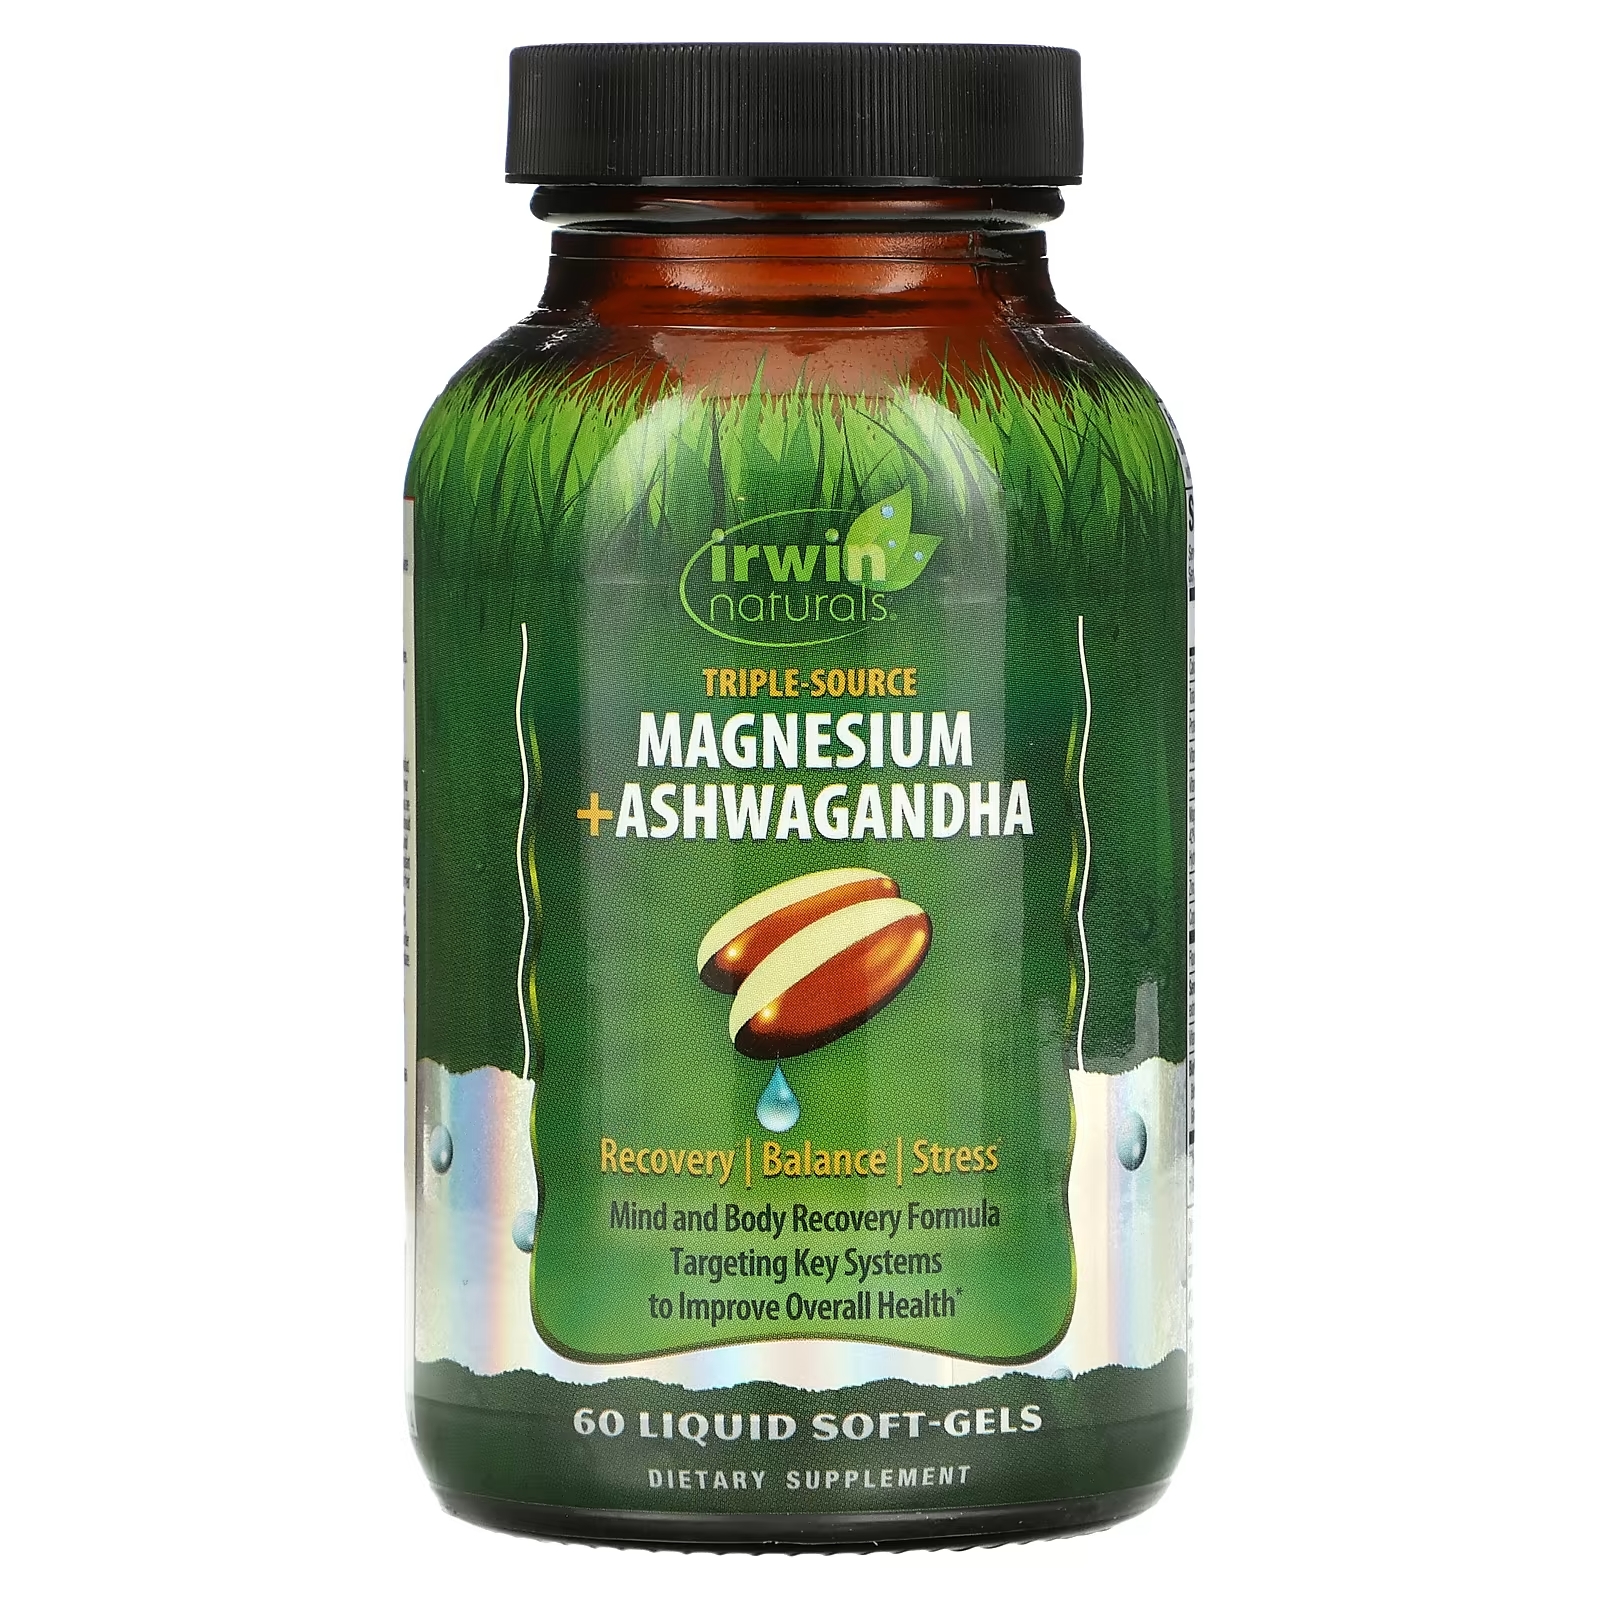 Irwin Naturals Triple Source Magnesium + ашваганда, 60 мягких таблеток irwin naturals суперочищающее средство с ягодами асаи 60 мягких таблеток